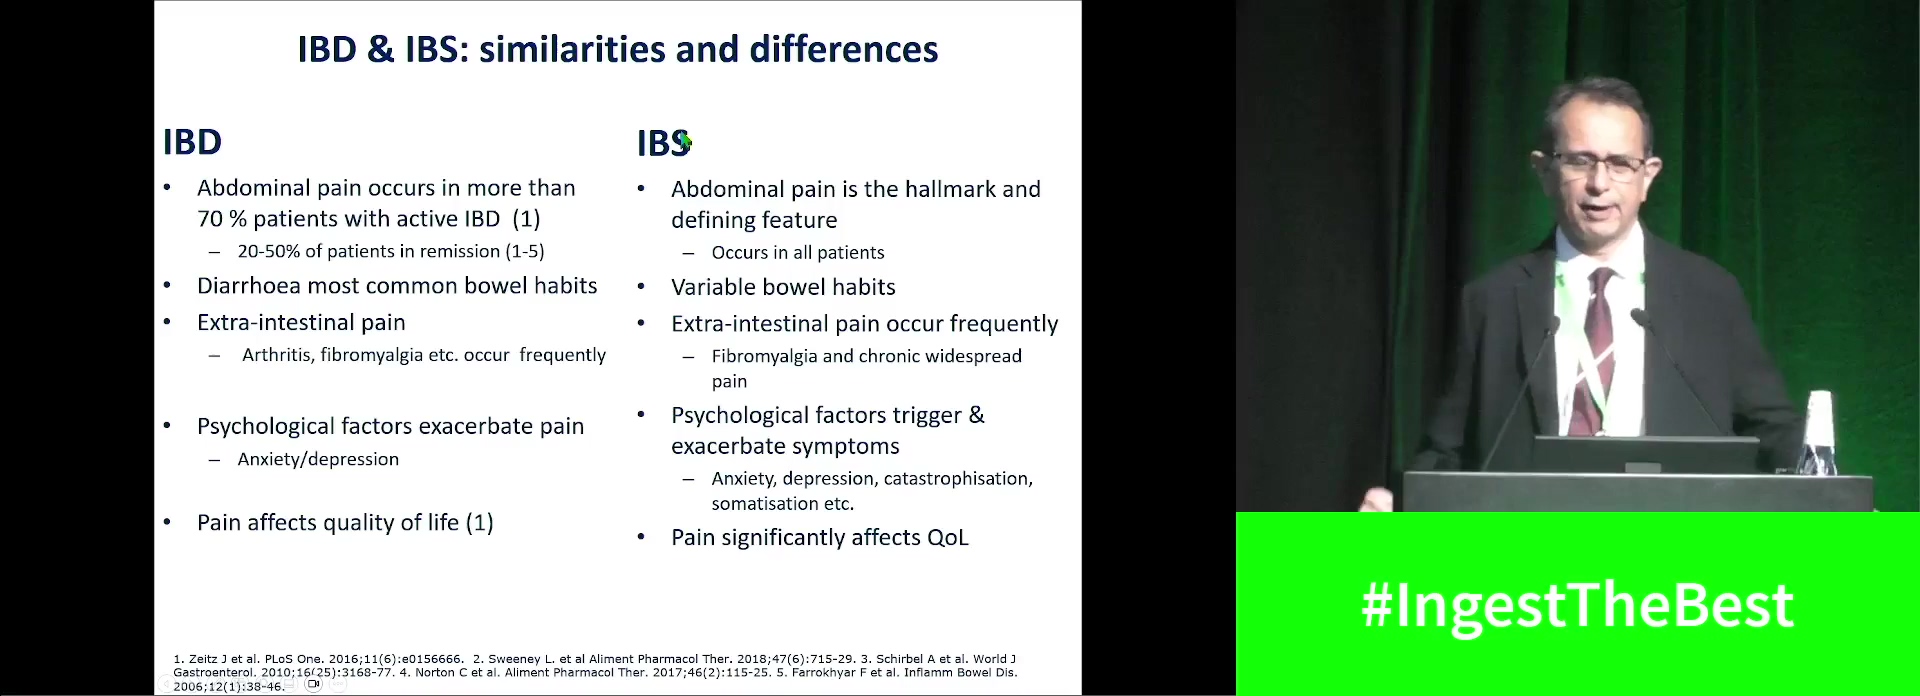 IBS and IBD: Same mechanism?